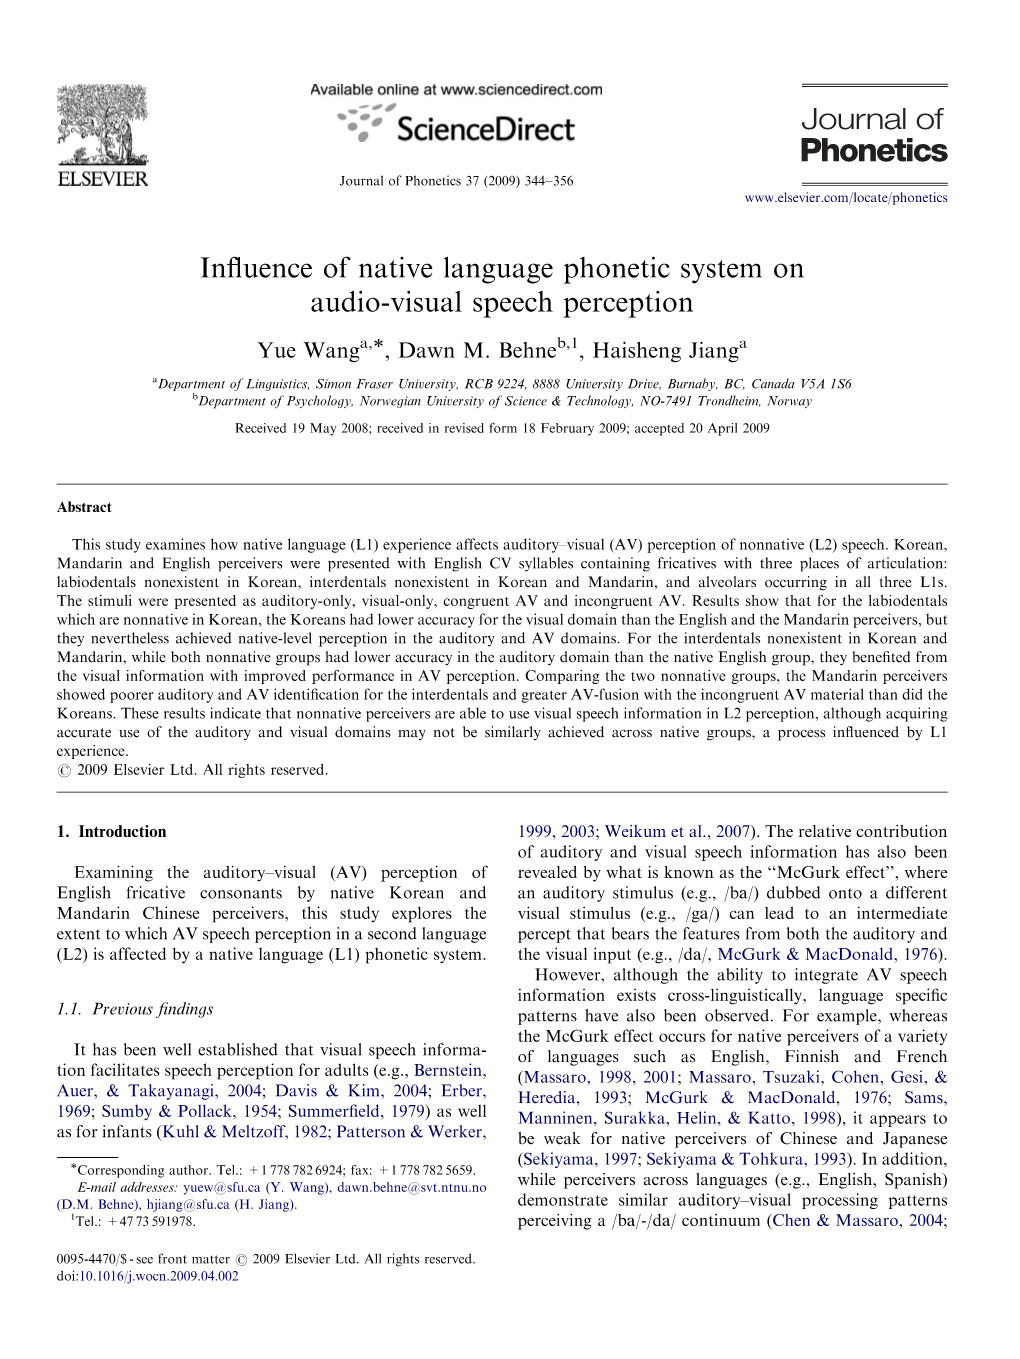 Influence of Native Language Phonetic System on Audio-Visual Speech